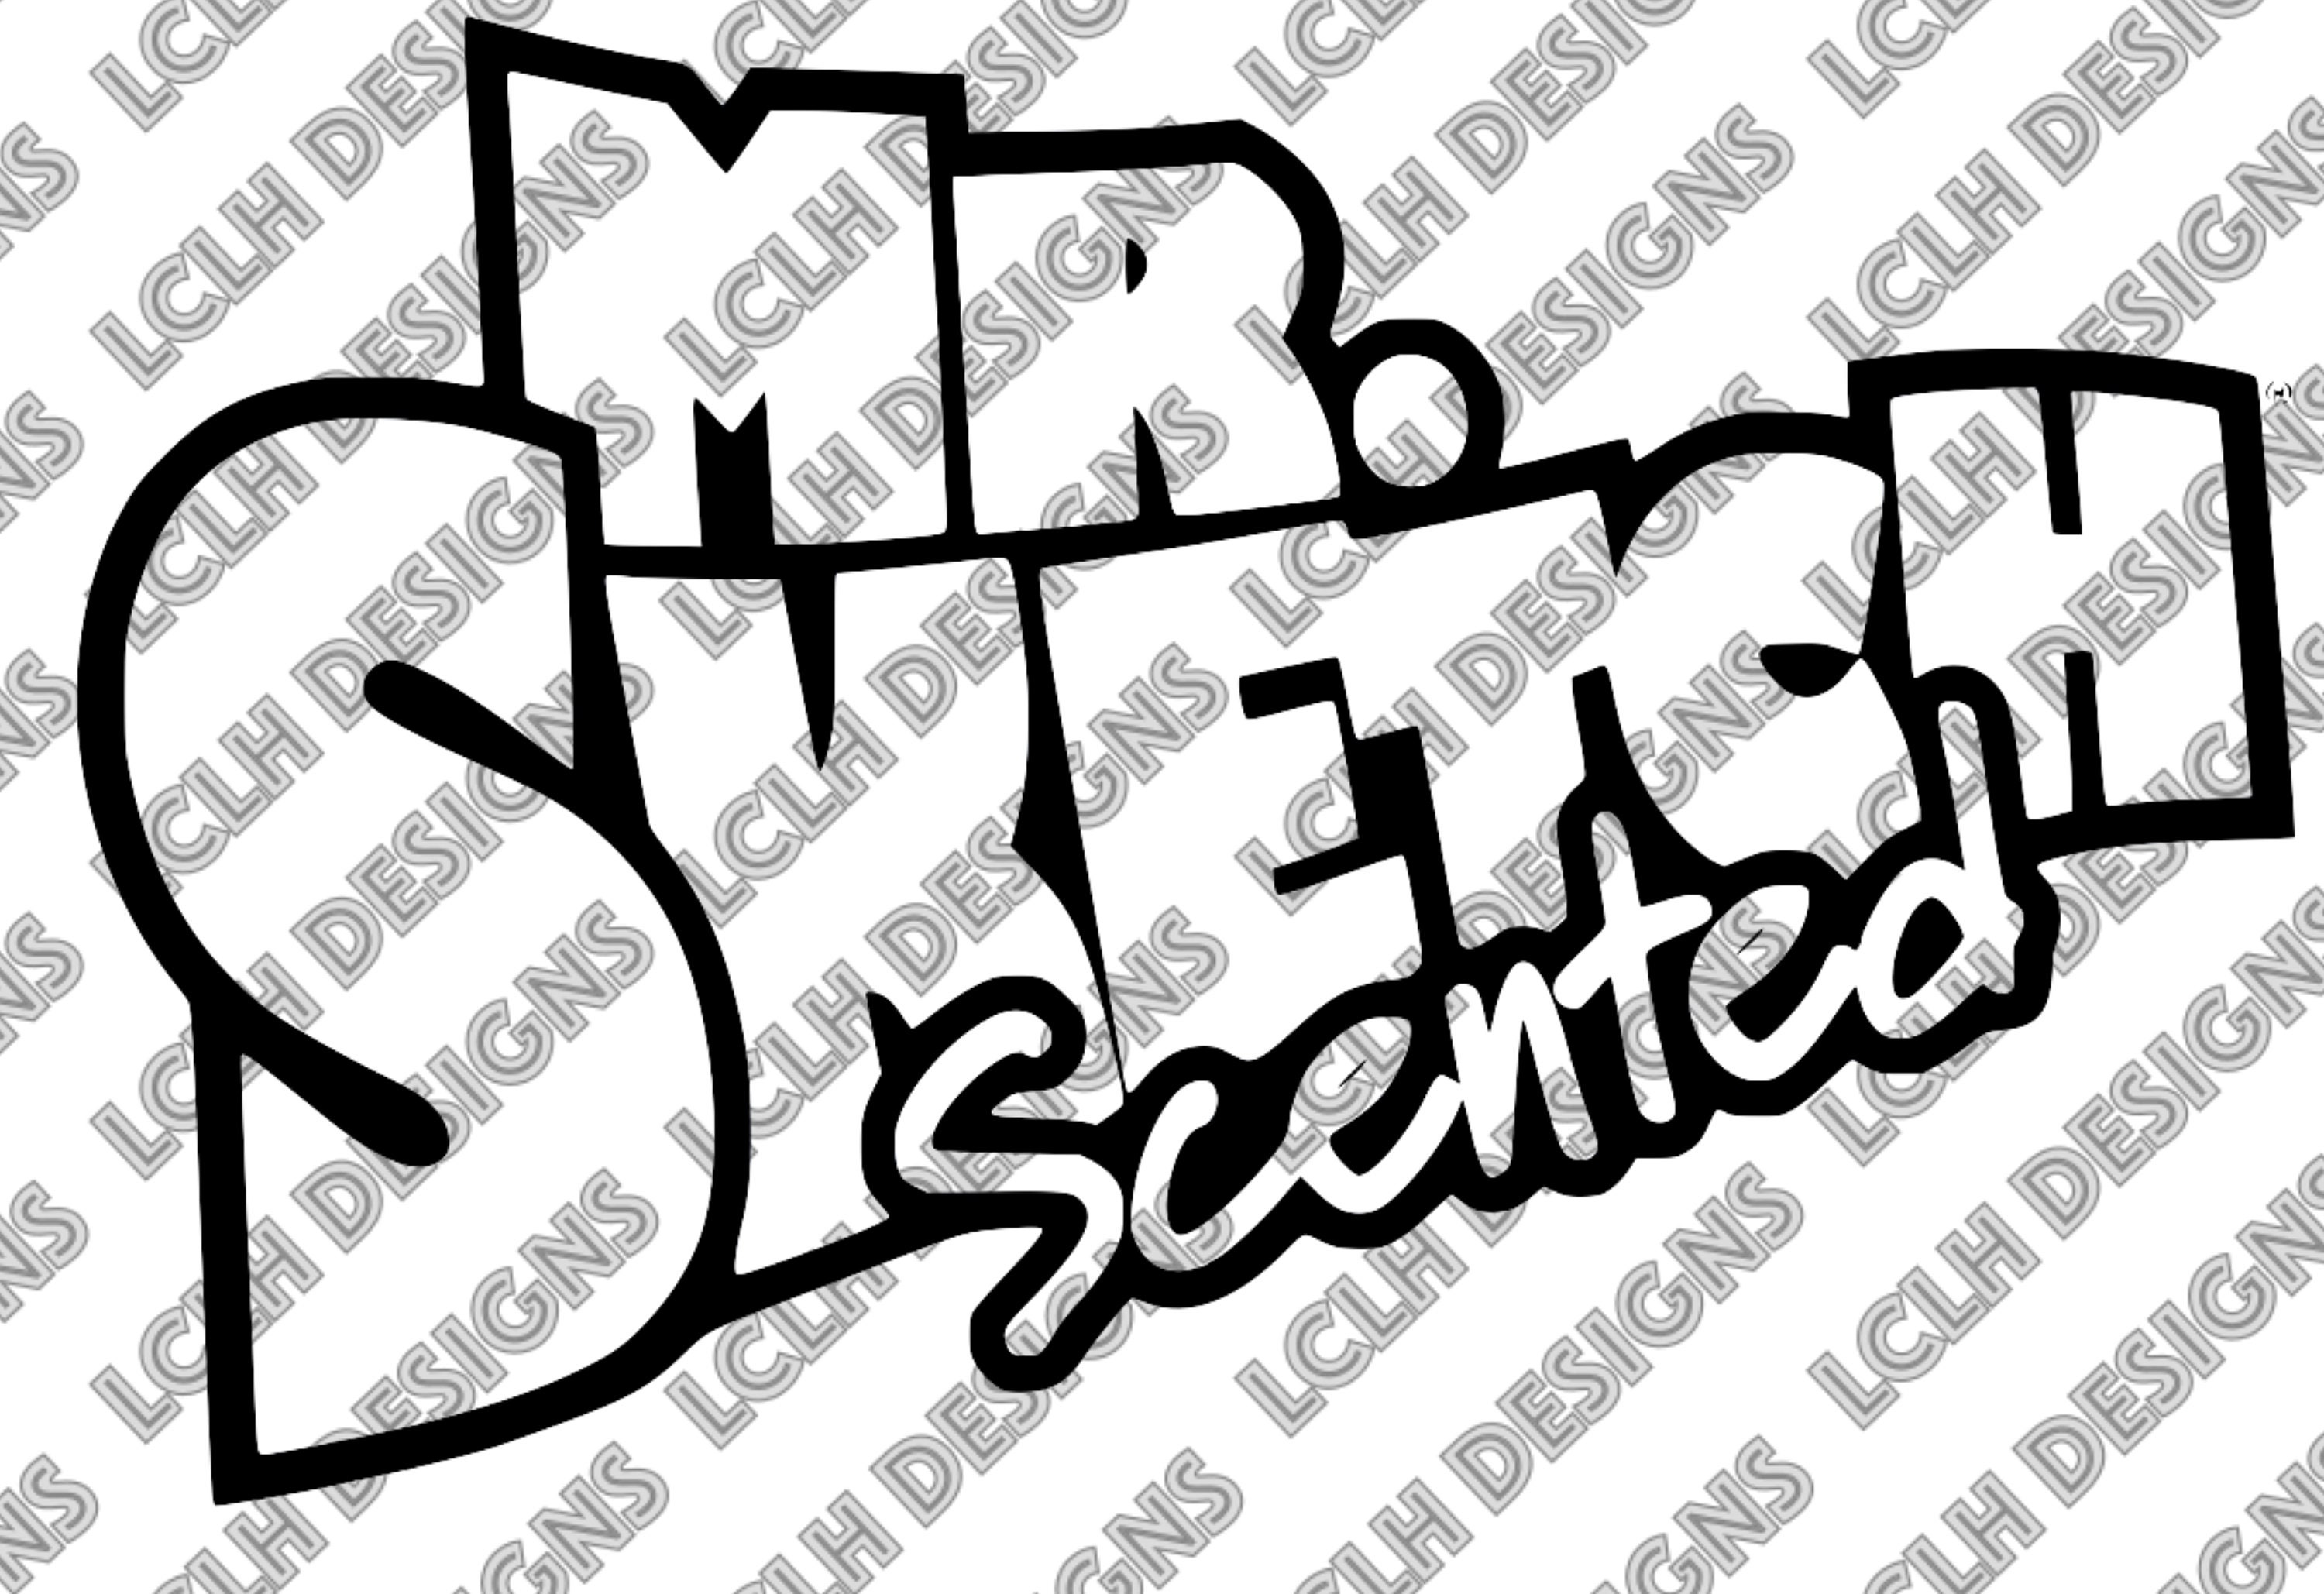 Mr. Sketch Scented Markers : r/nostalgia